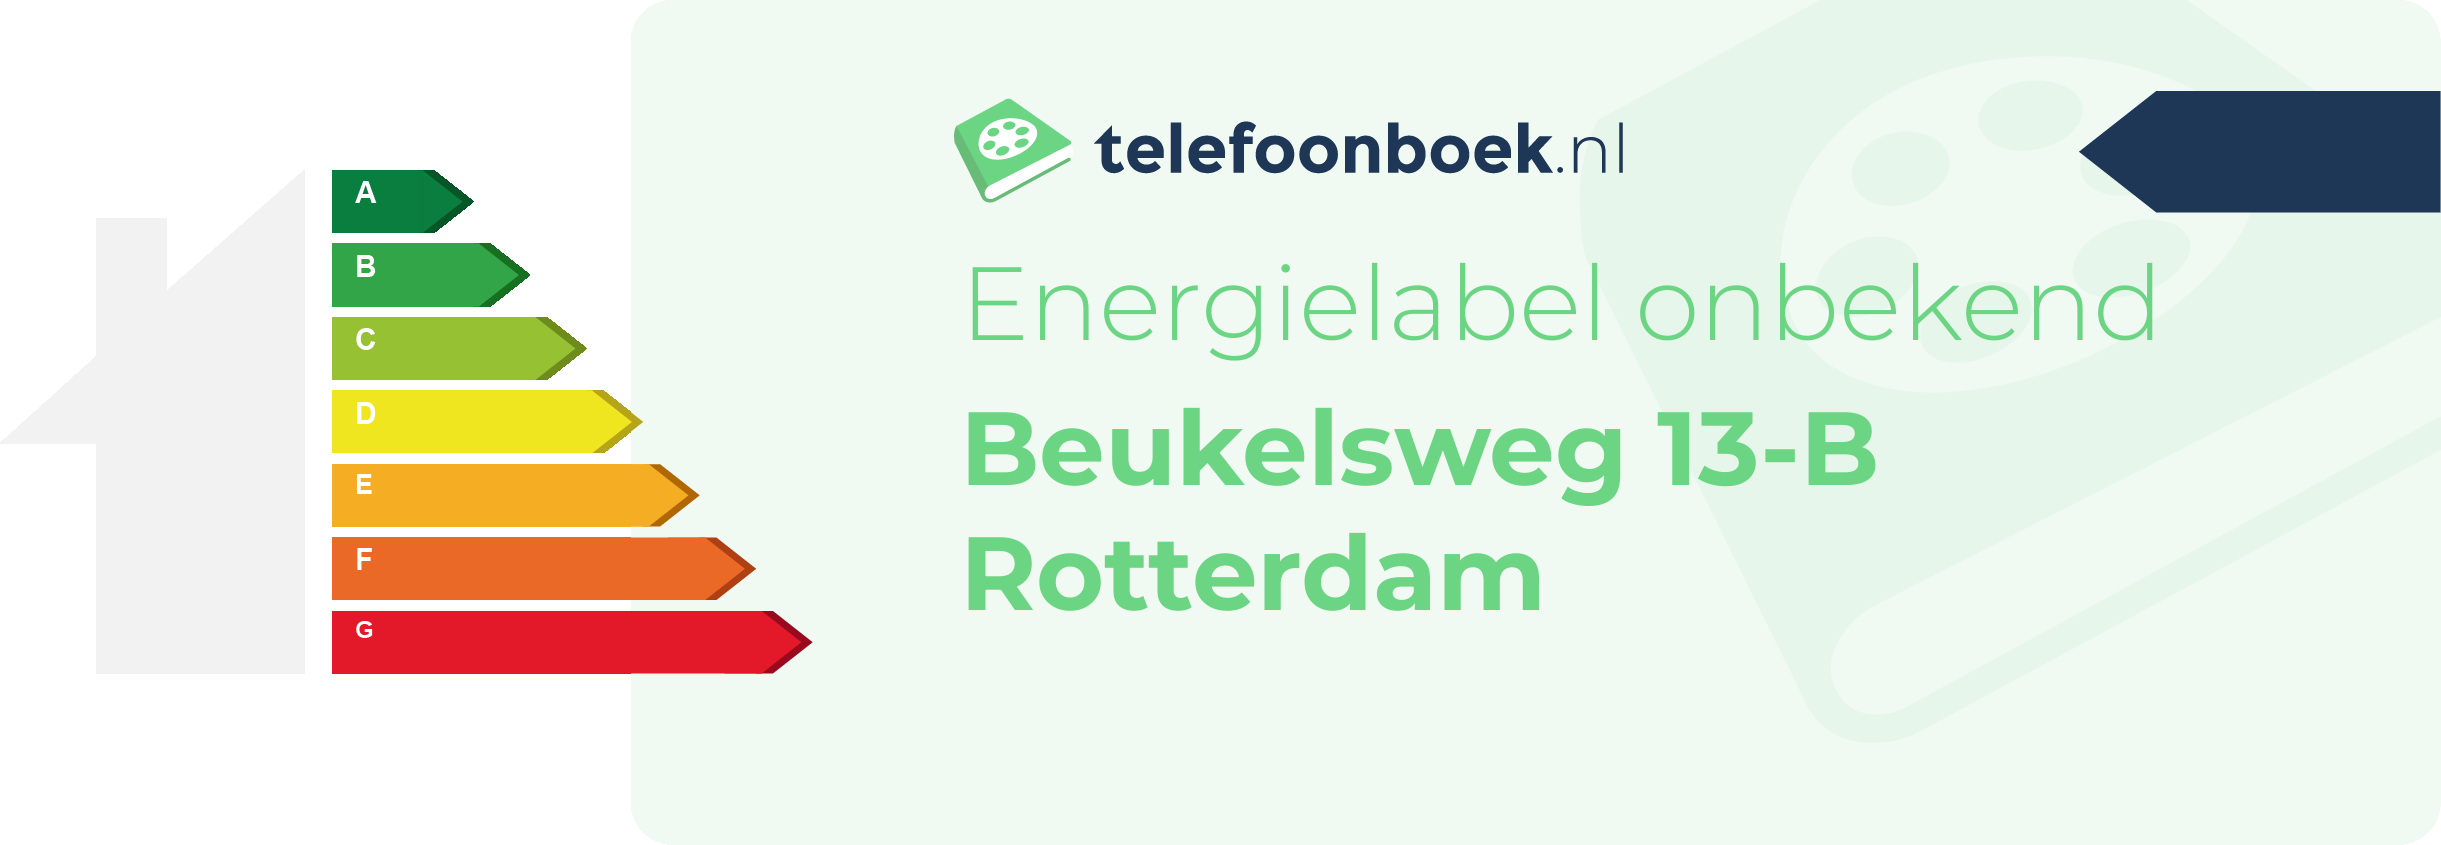 Energielabel Beukelsweg 13-B Rotterdam